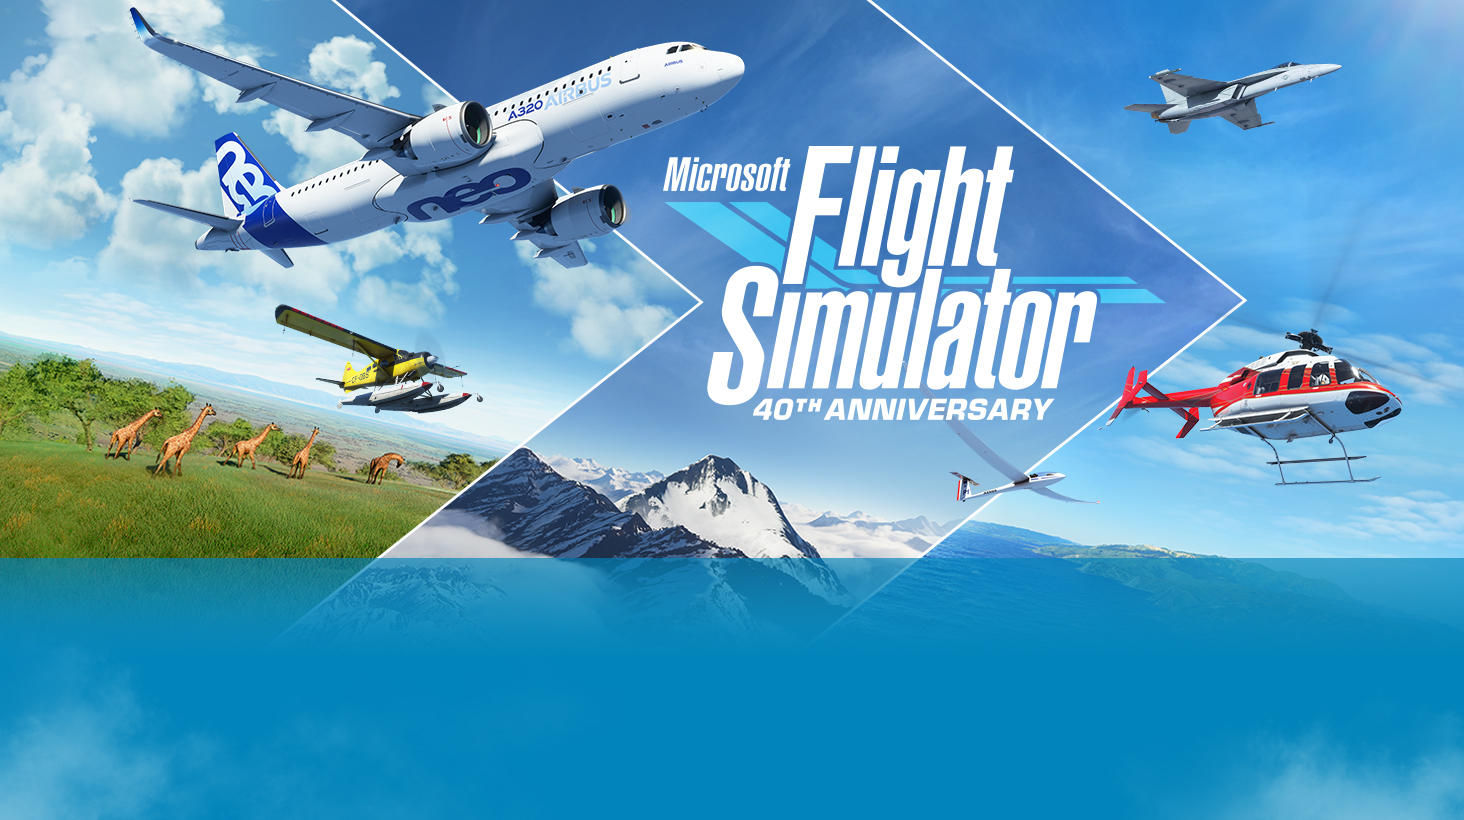 Microsoft Flight Simulator: Standard Edition – Windows 10 [Digital Code]